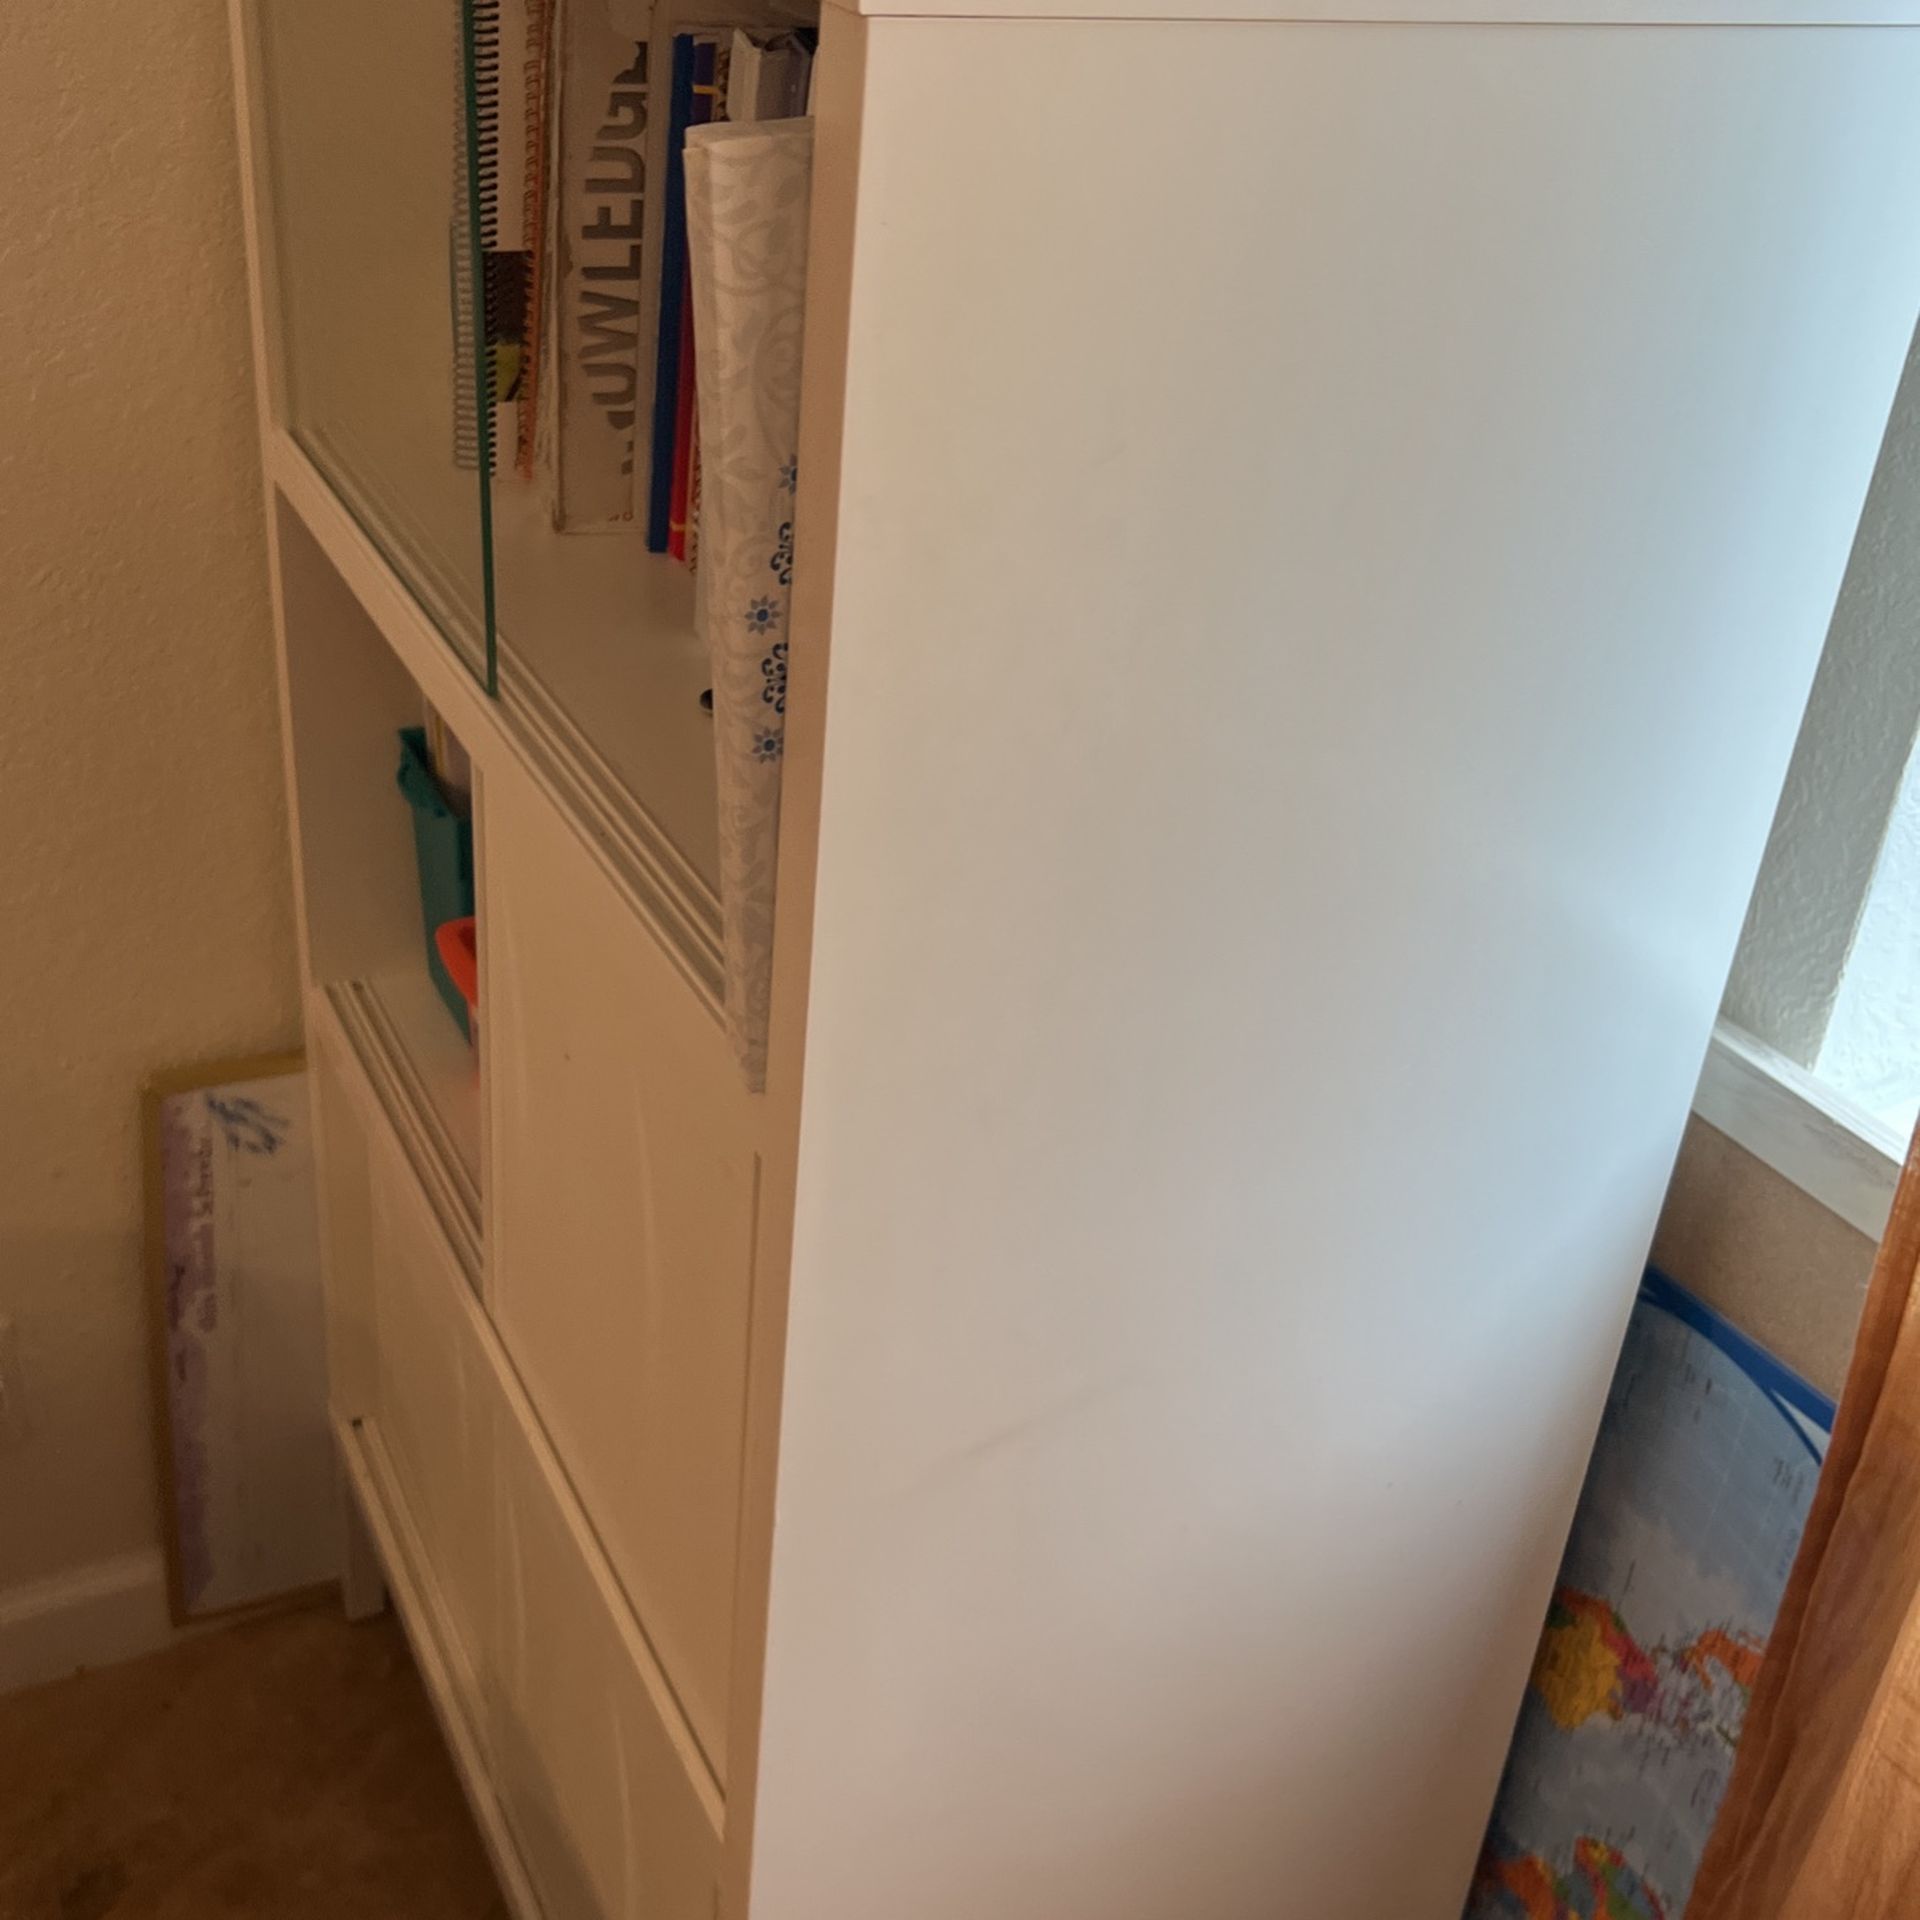 Cabinet Book Shelf From IKEA